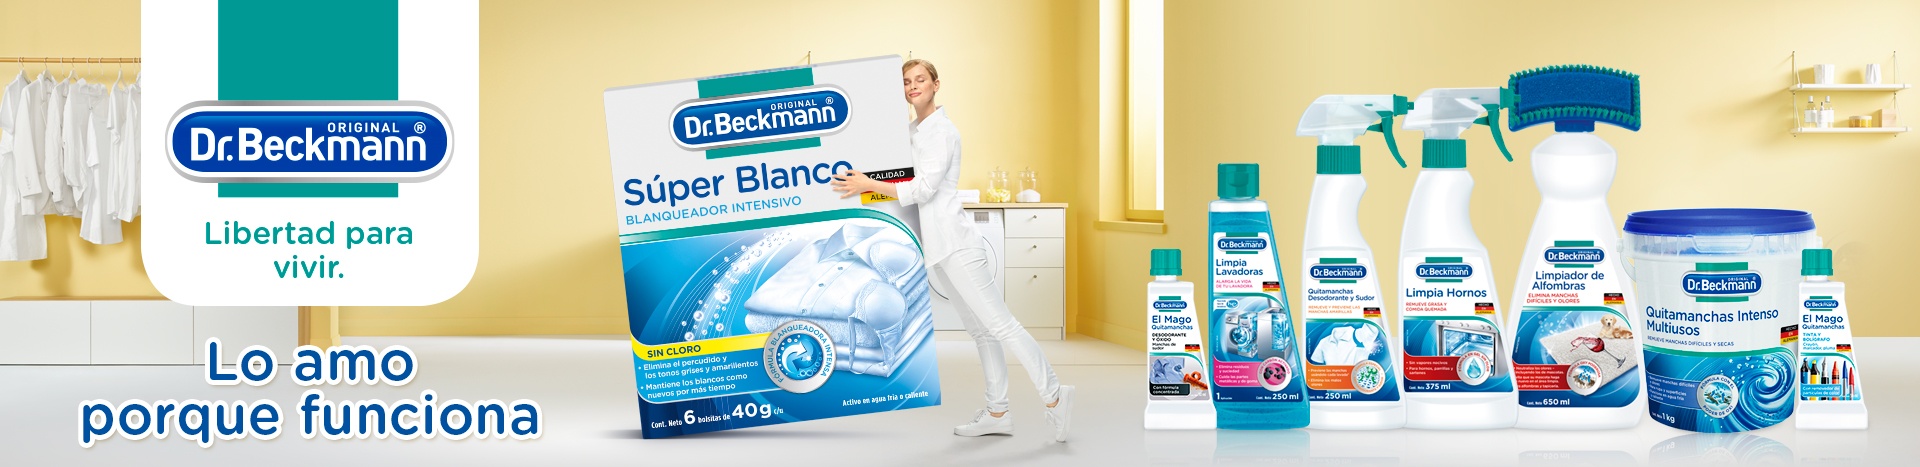 Dr. Beckmann productos